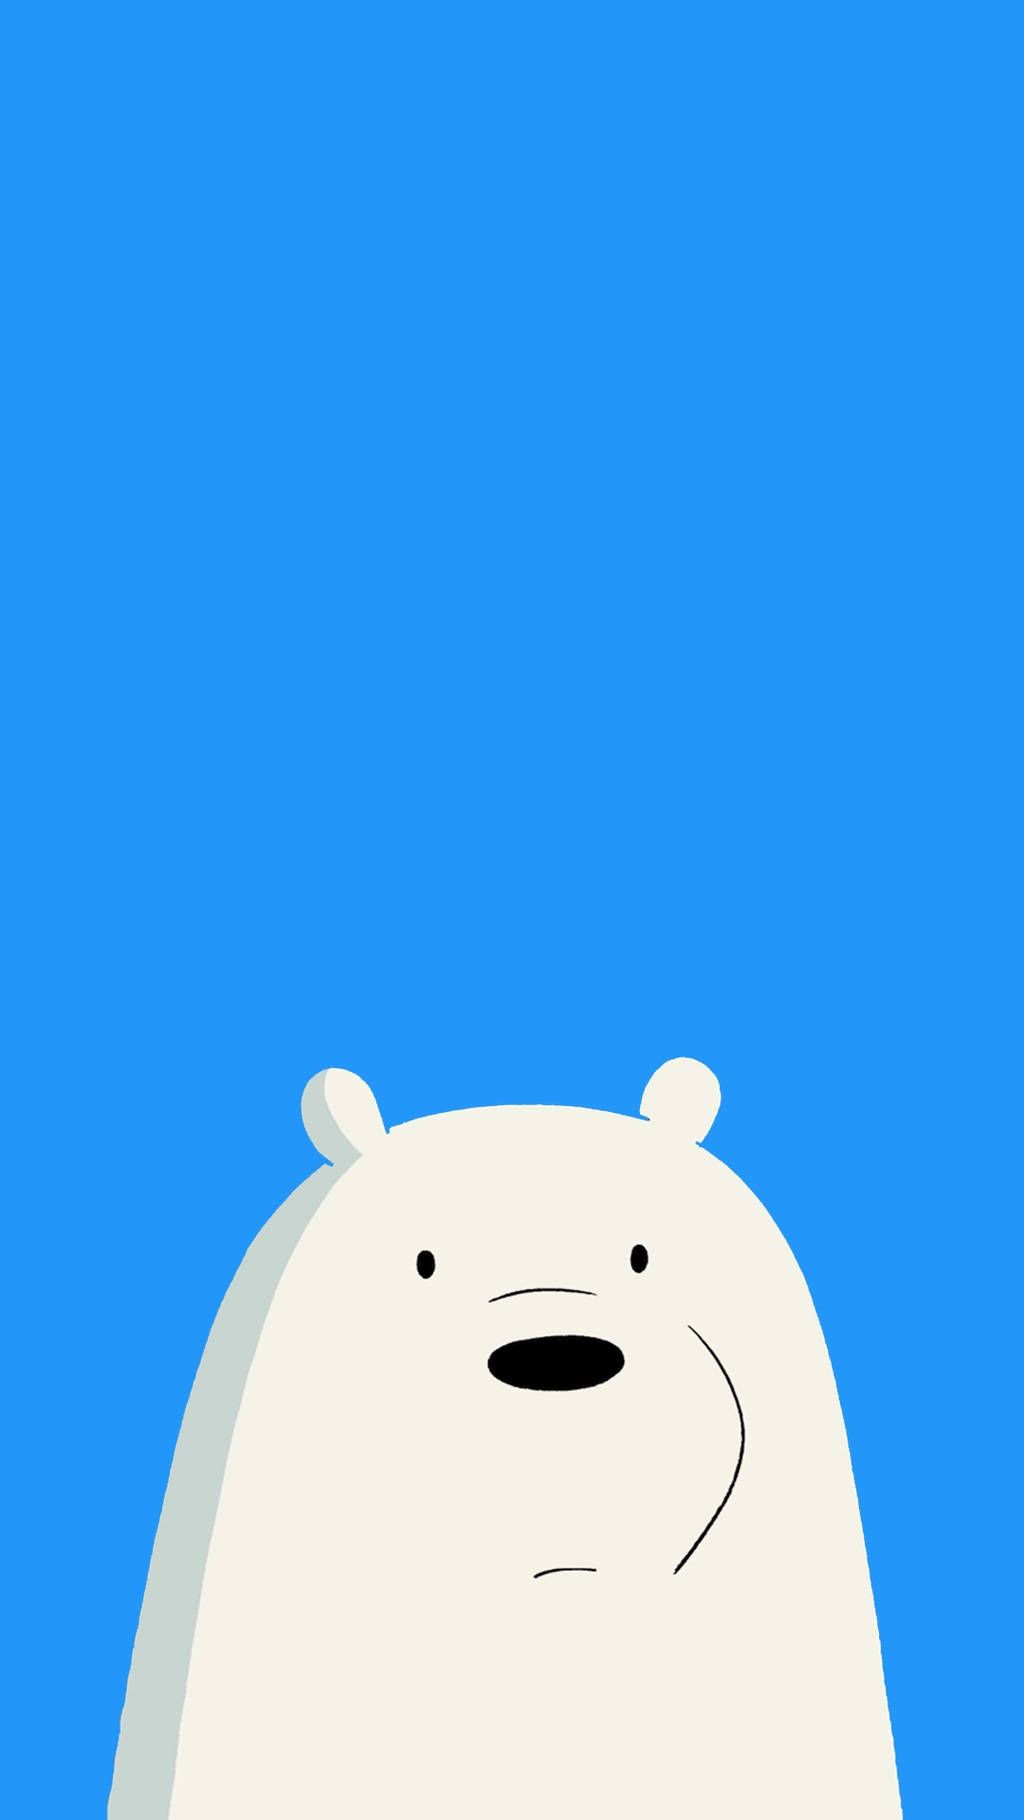 Ice Bear wallpaper I made for my phone - We Bare Bears